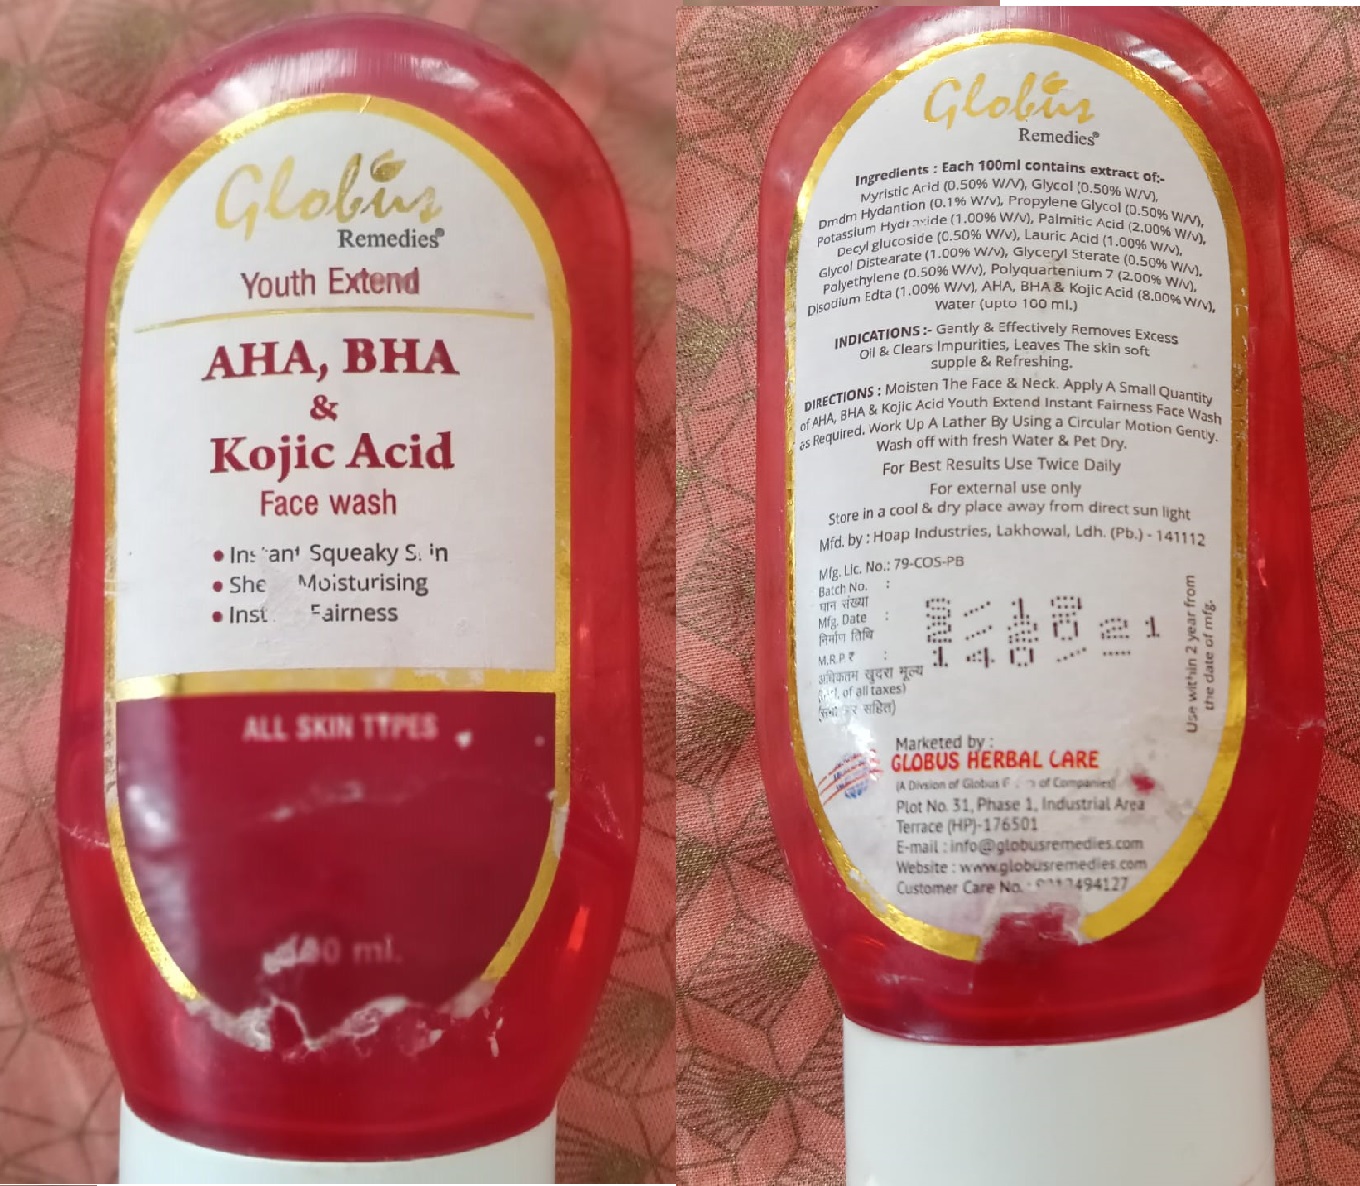 Globus AHA BHA and Kojic Acid Face Wash Review